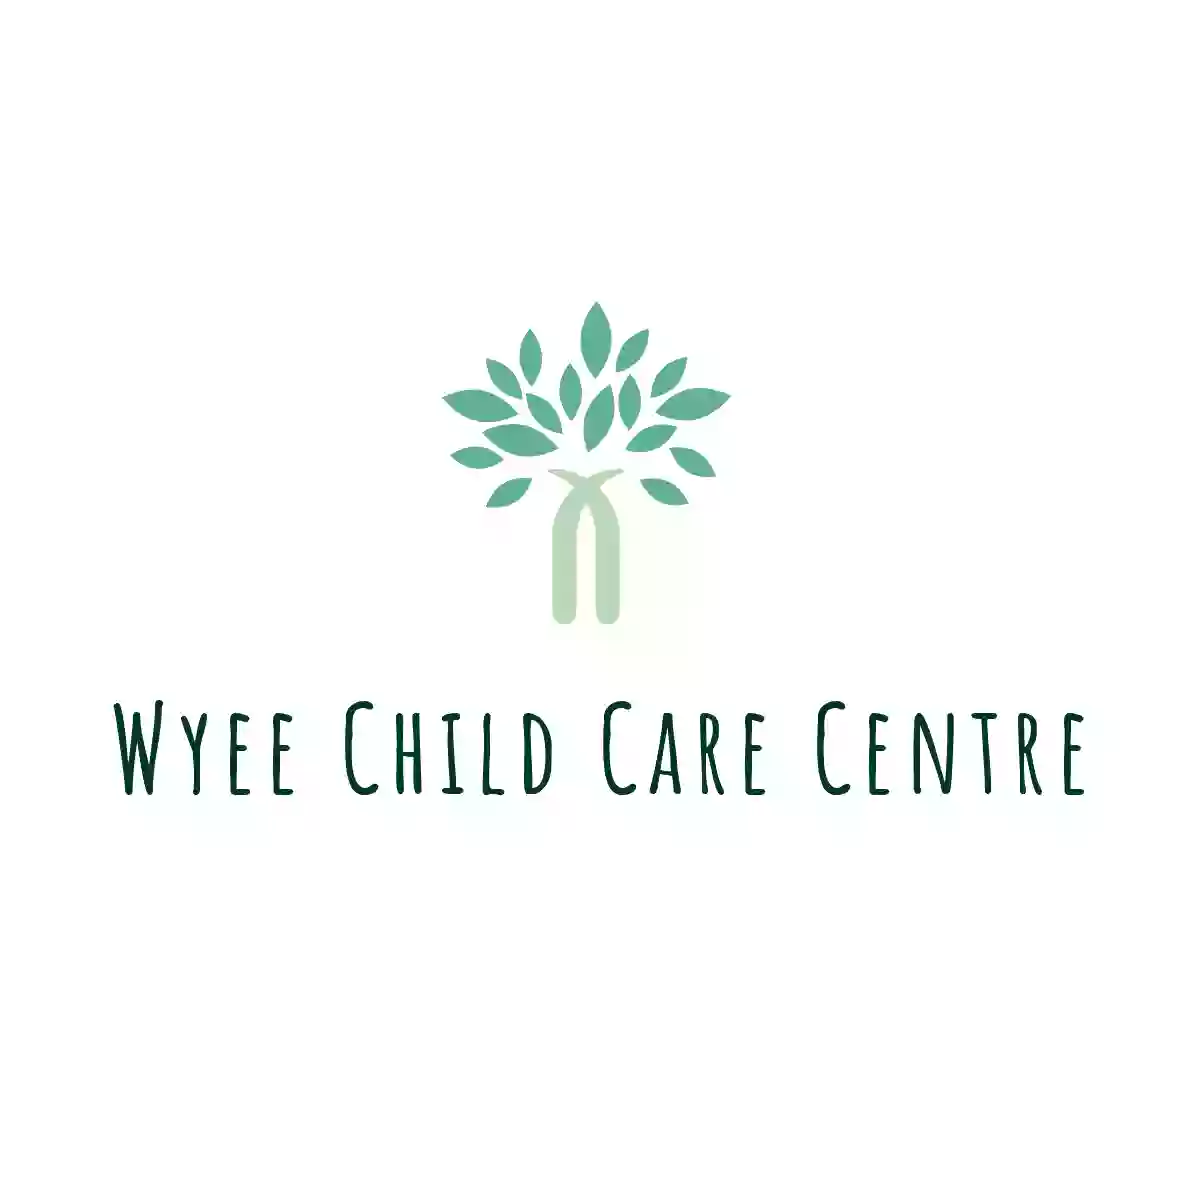 Wyee Child Care Centre